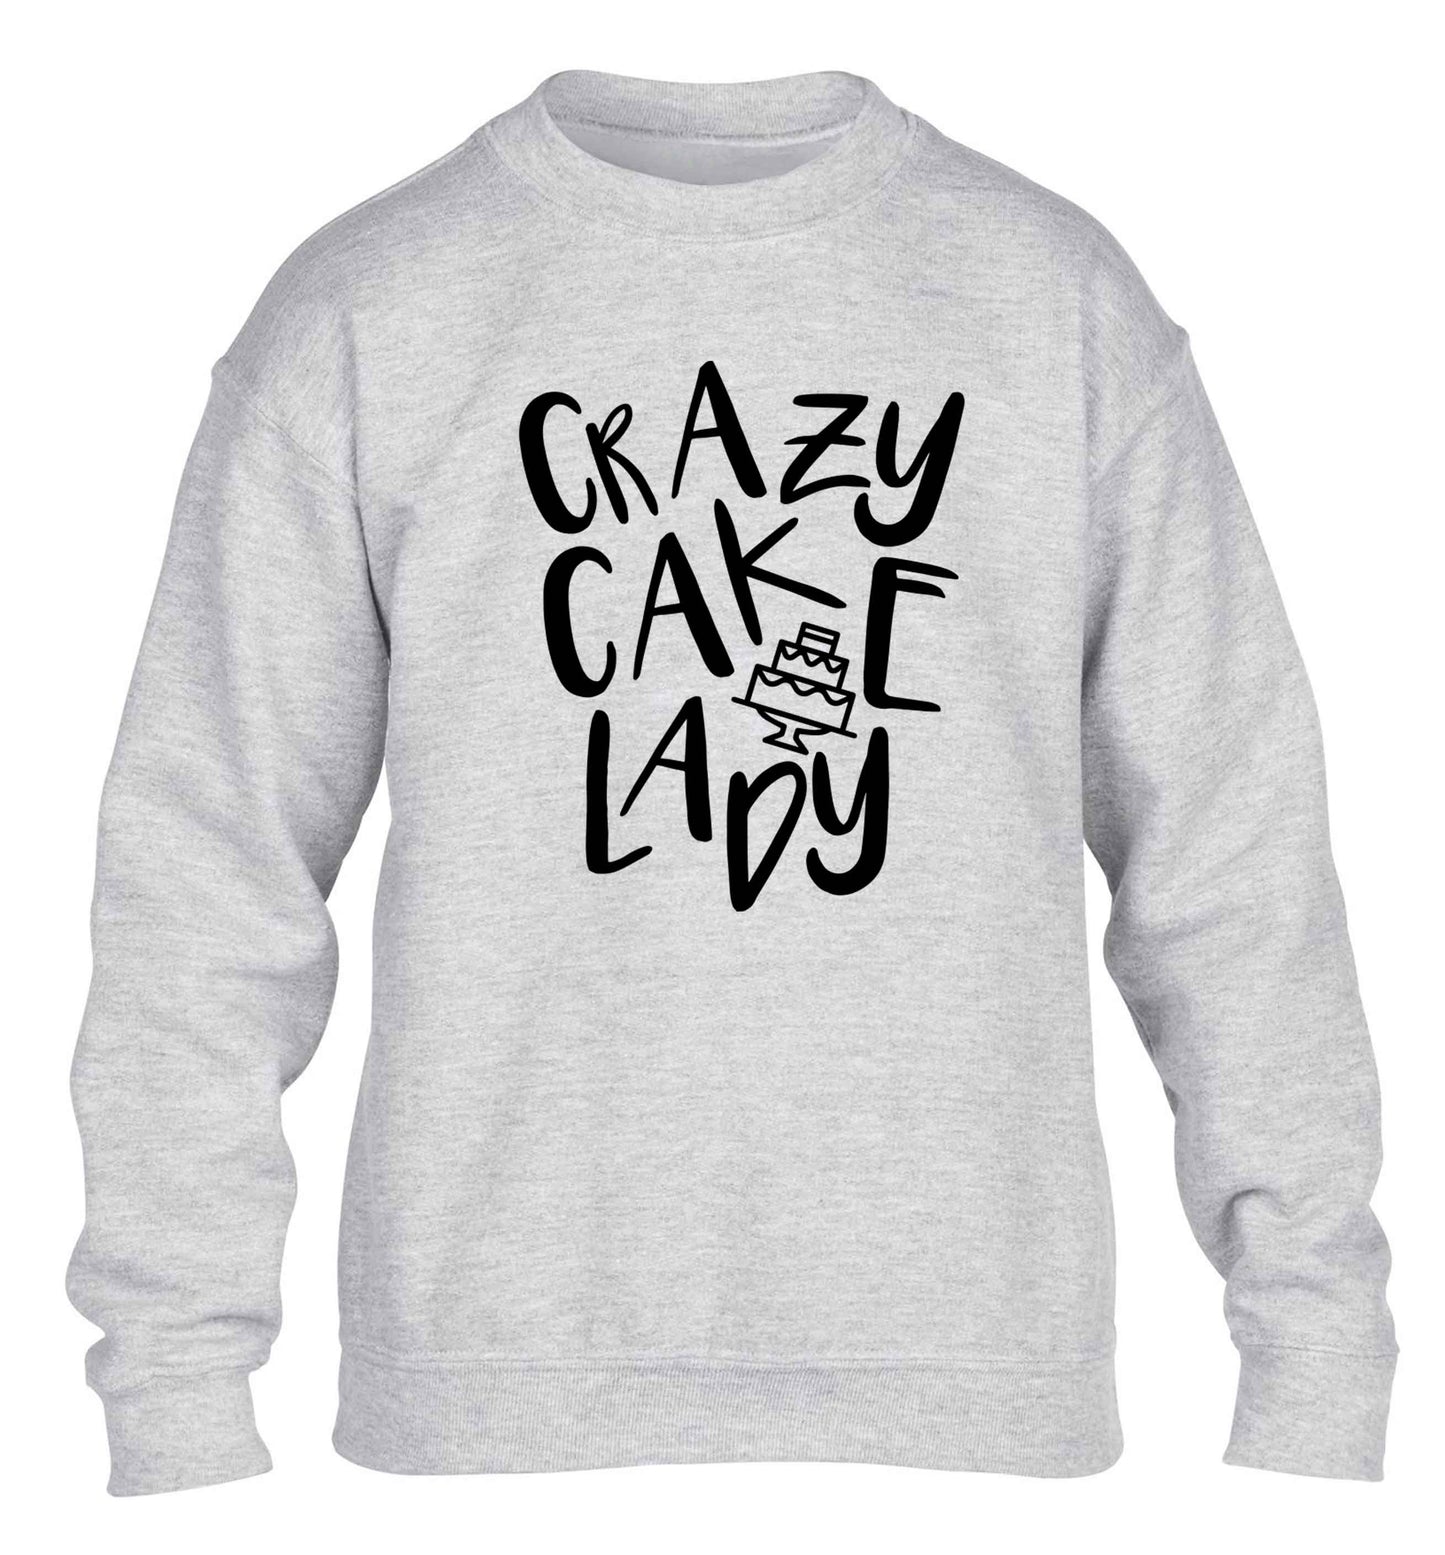 Crazy cake lady children's grey sweater 12-13 Years